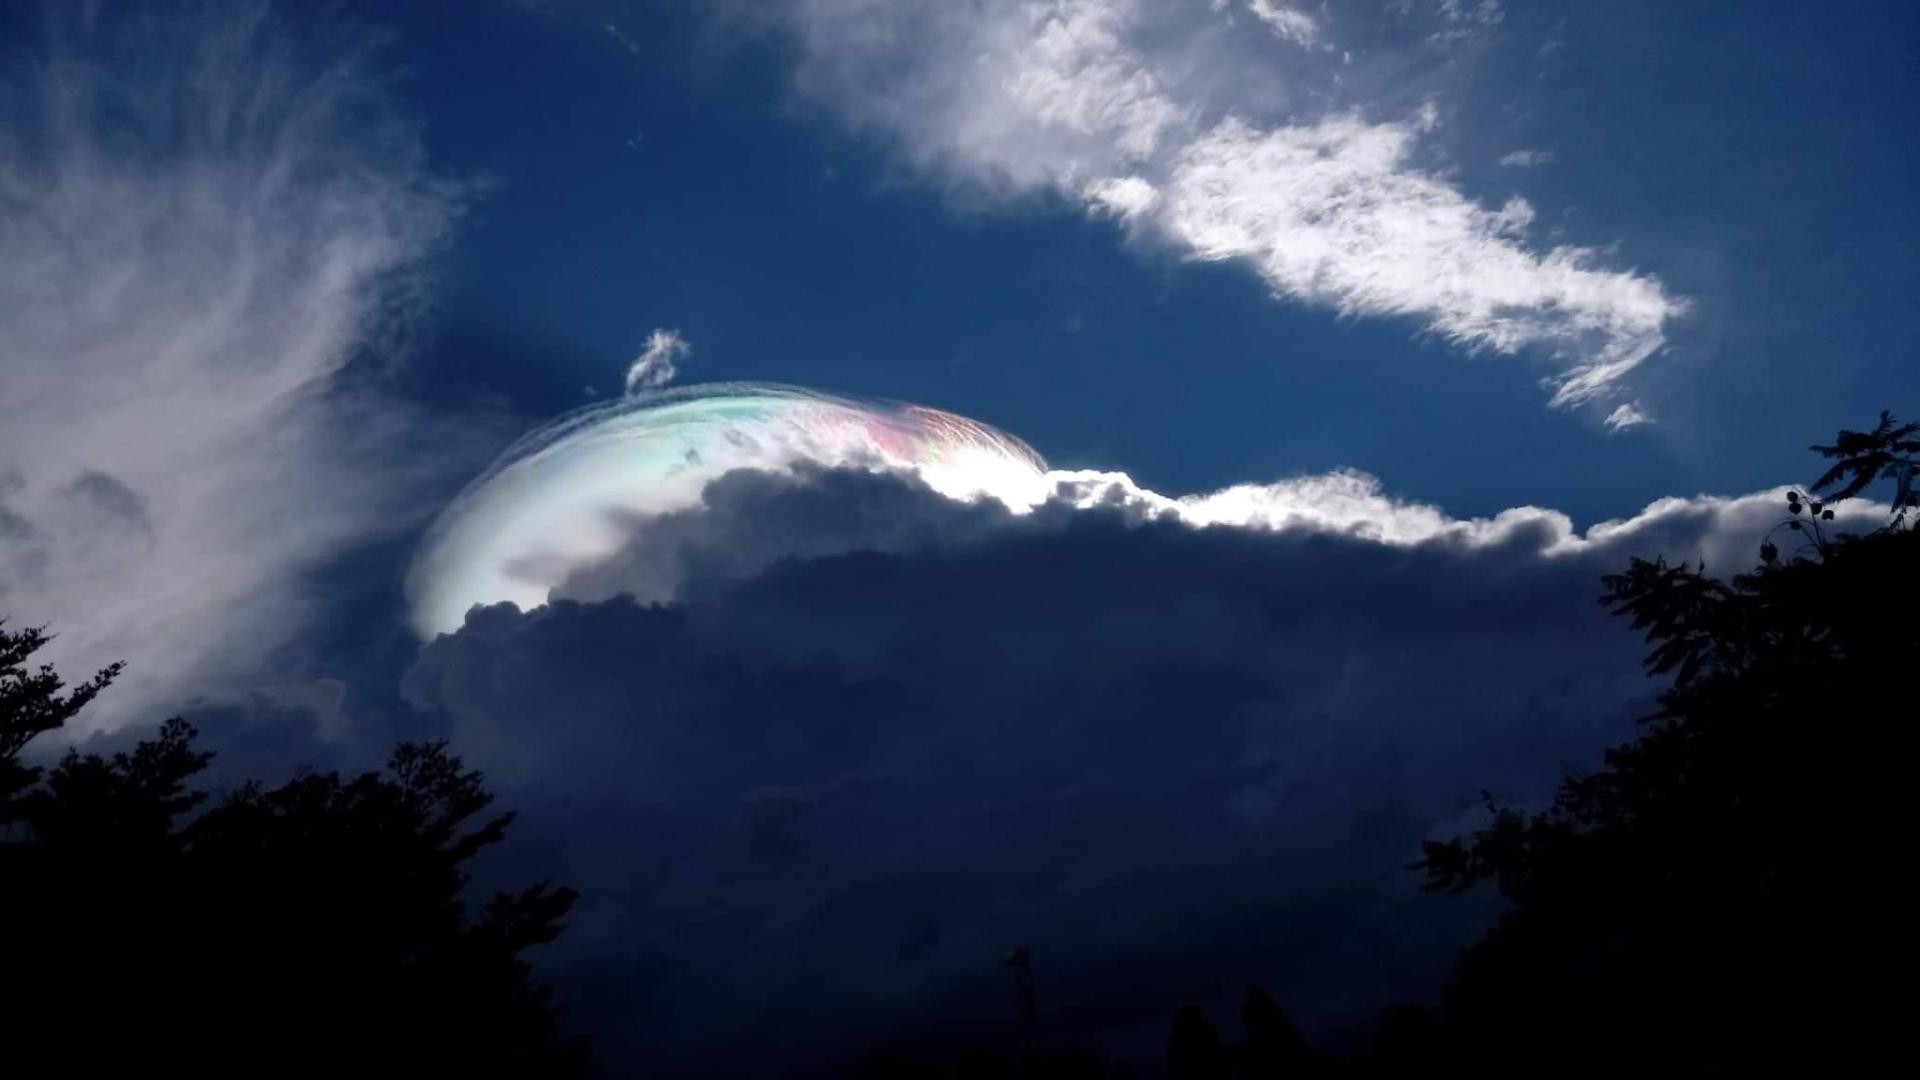 nuage iridescent à tananarive janvier 2021